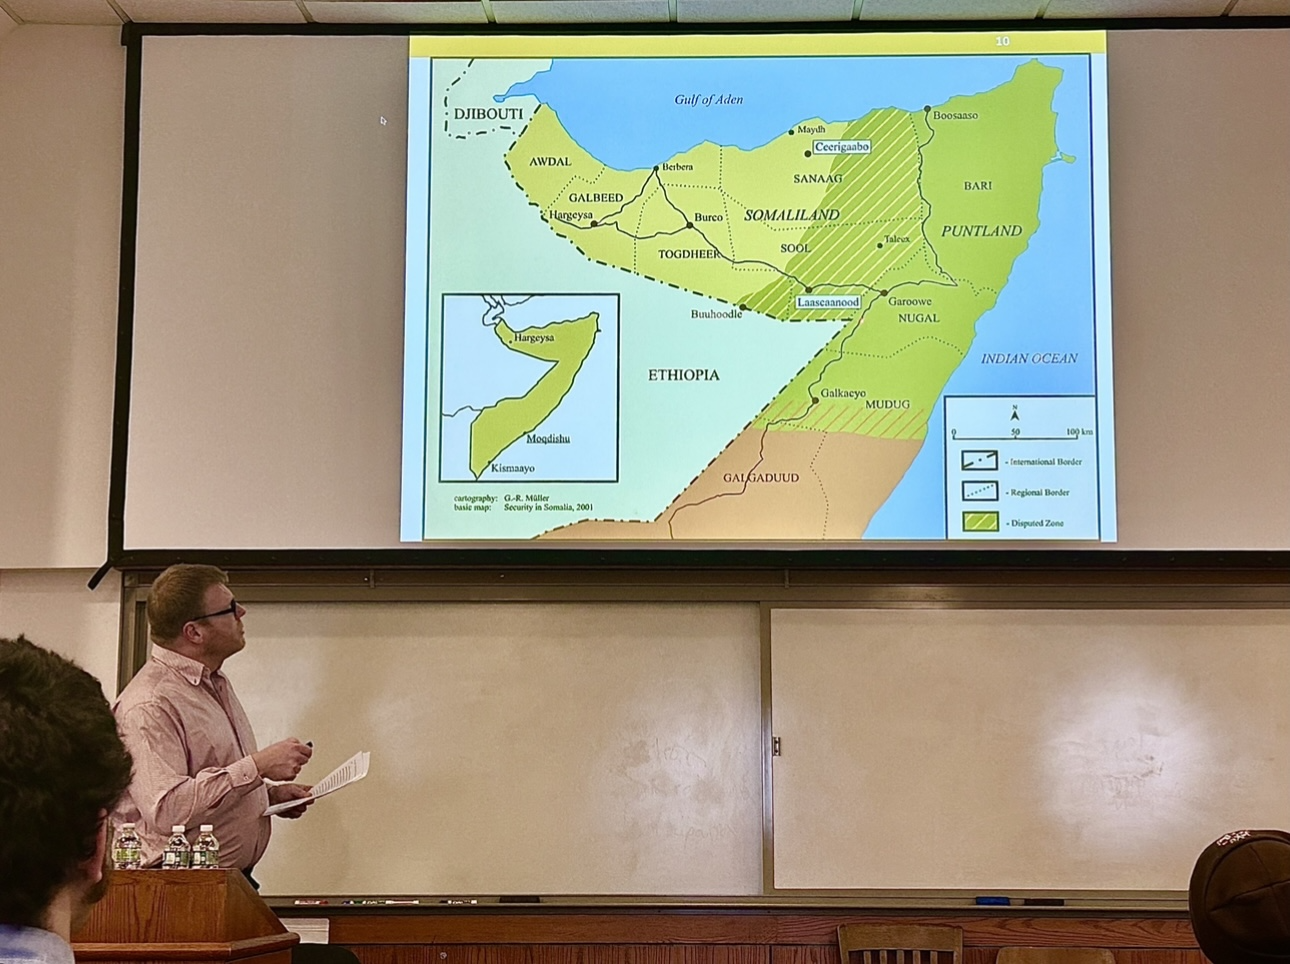 Dr. Markus V. Hoehne Discusses Conflict, Activism in Northern Somalia